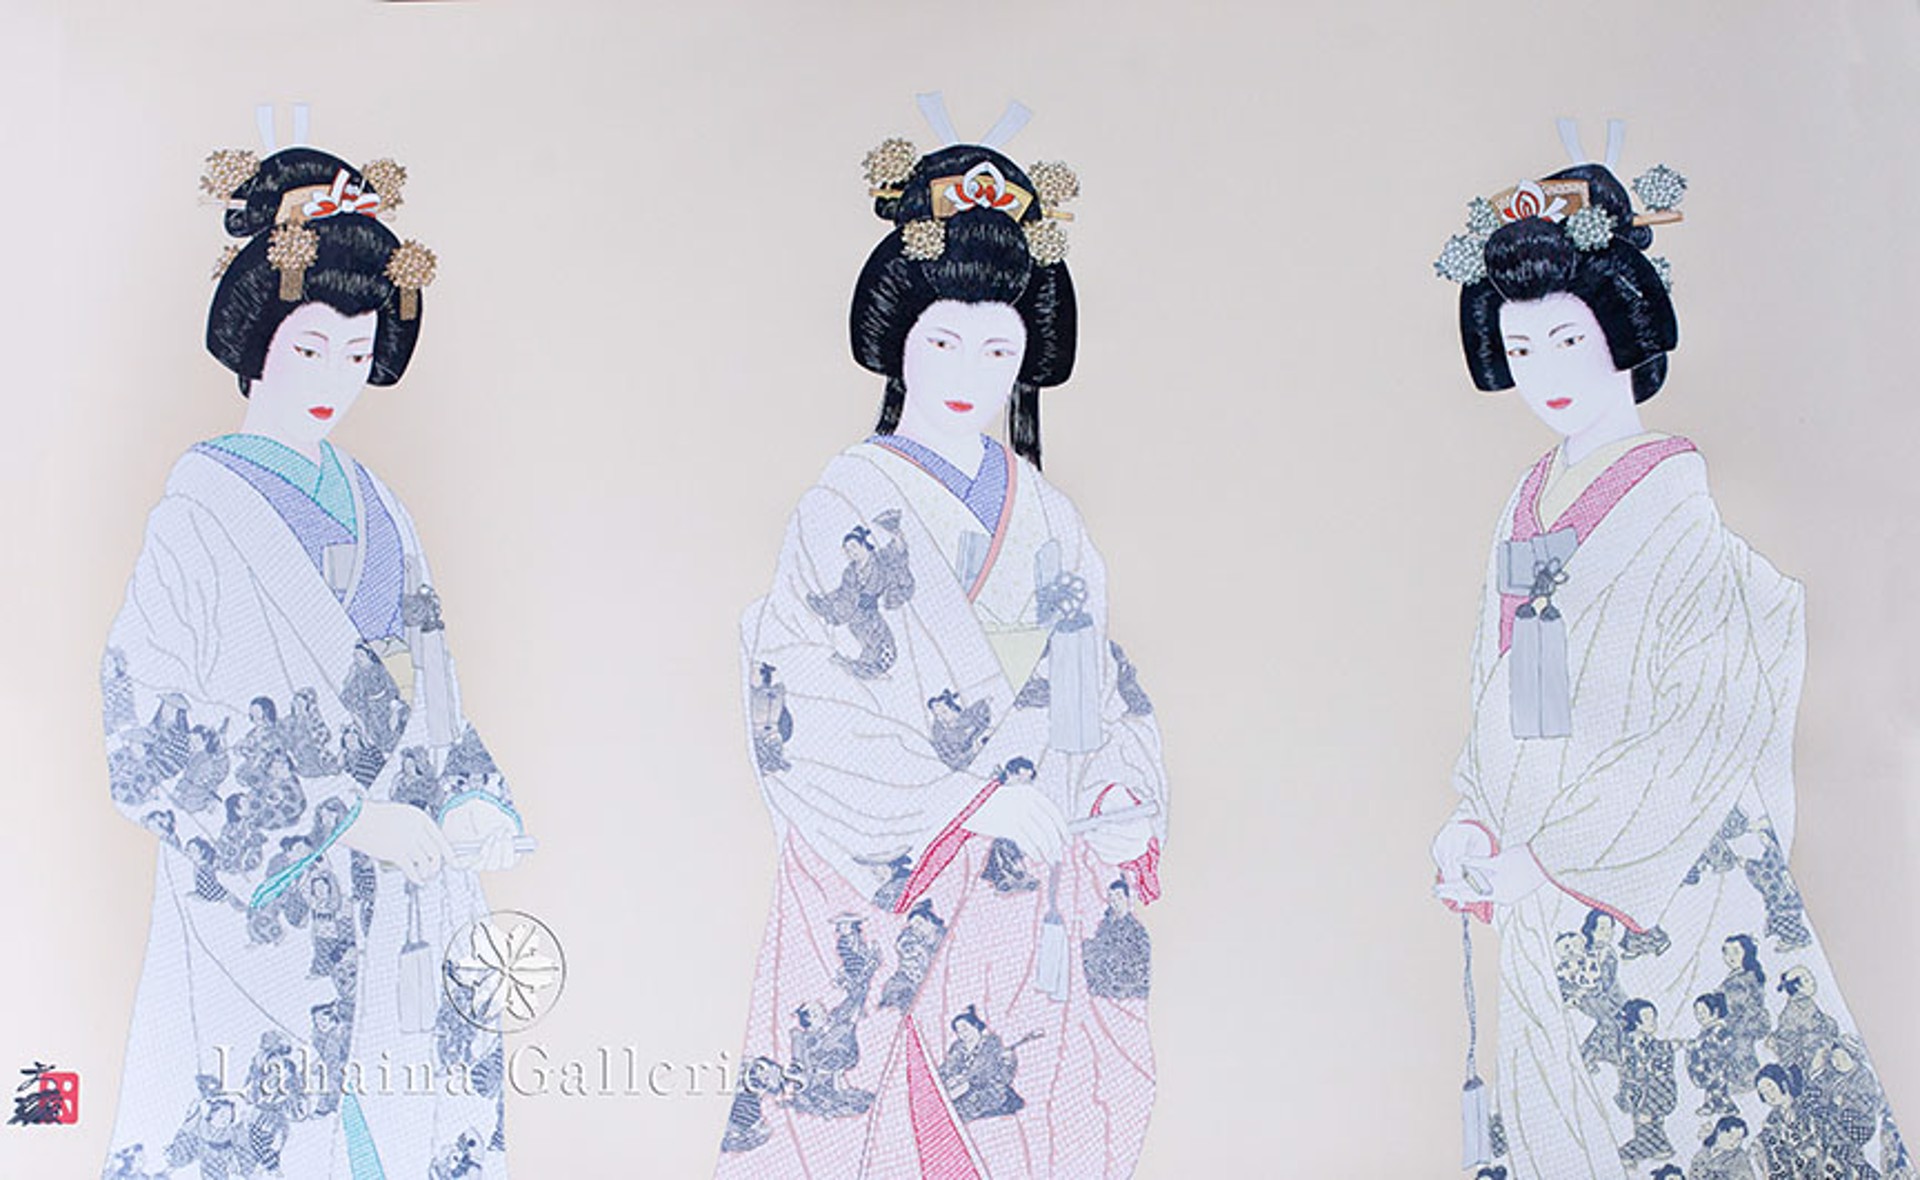 The Eternal Brides by Hisashi Otsuka